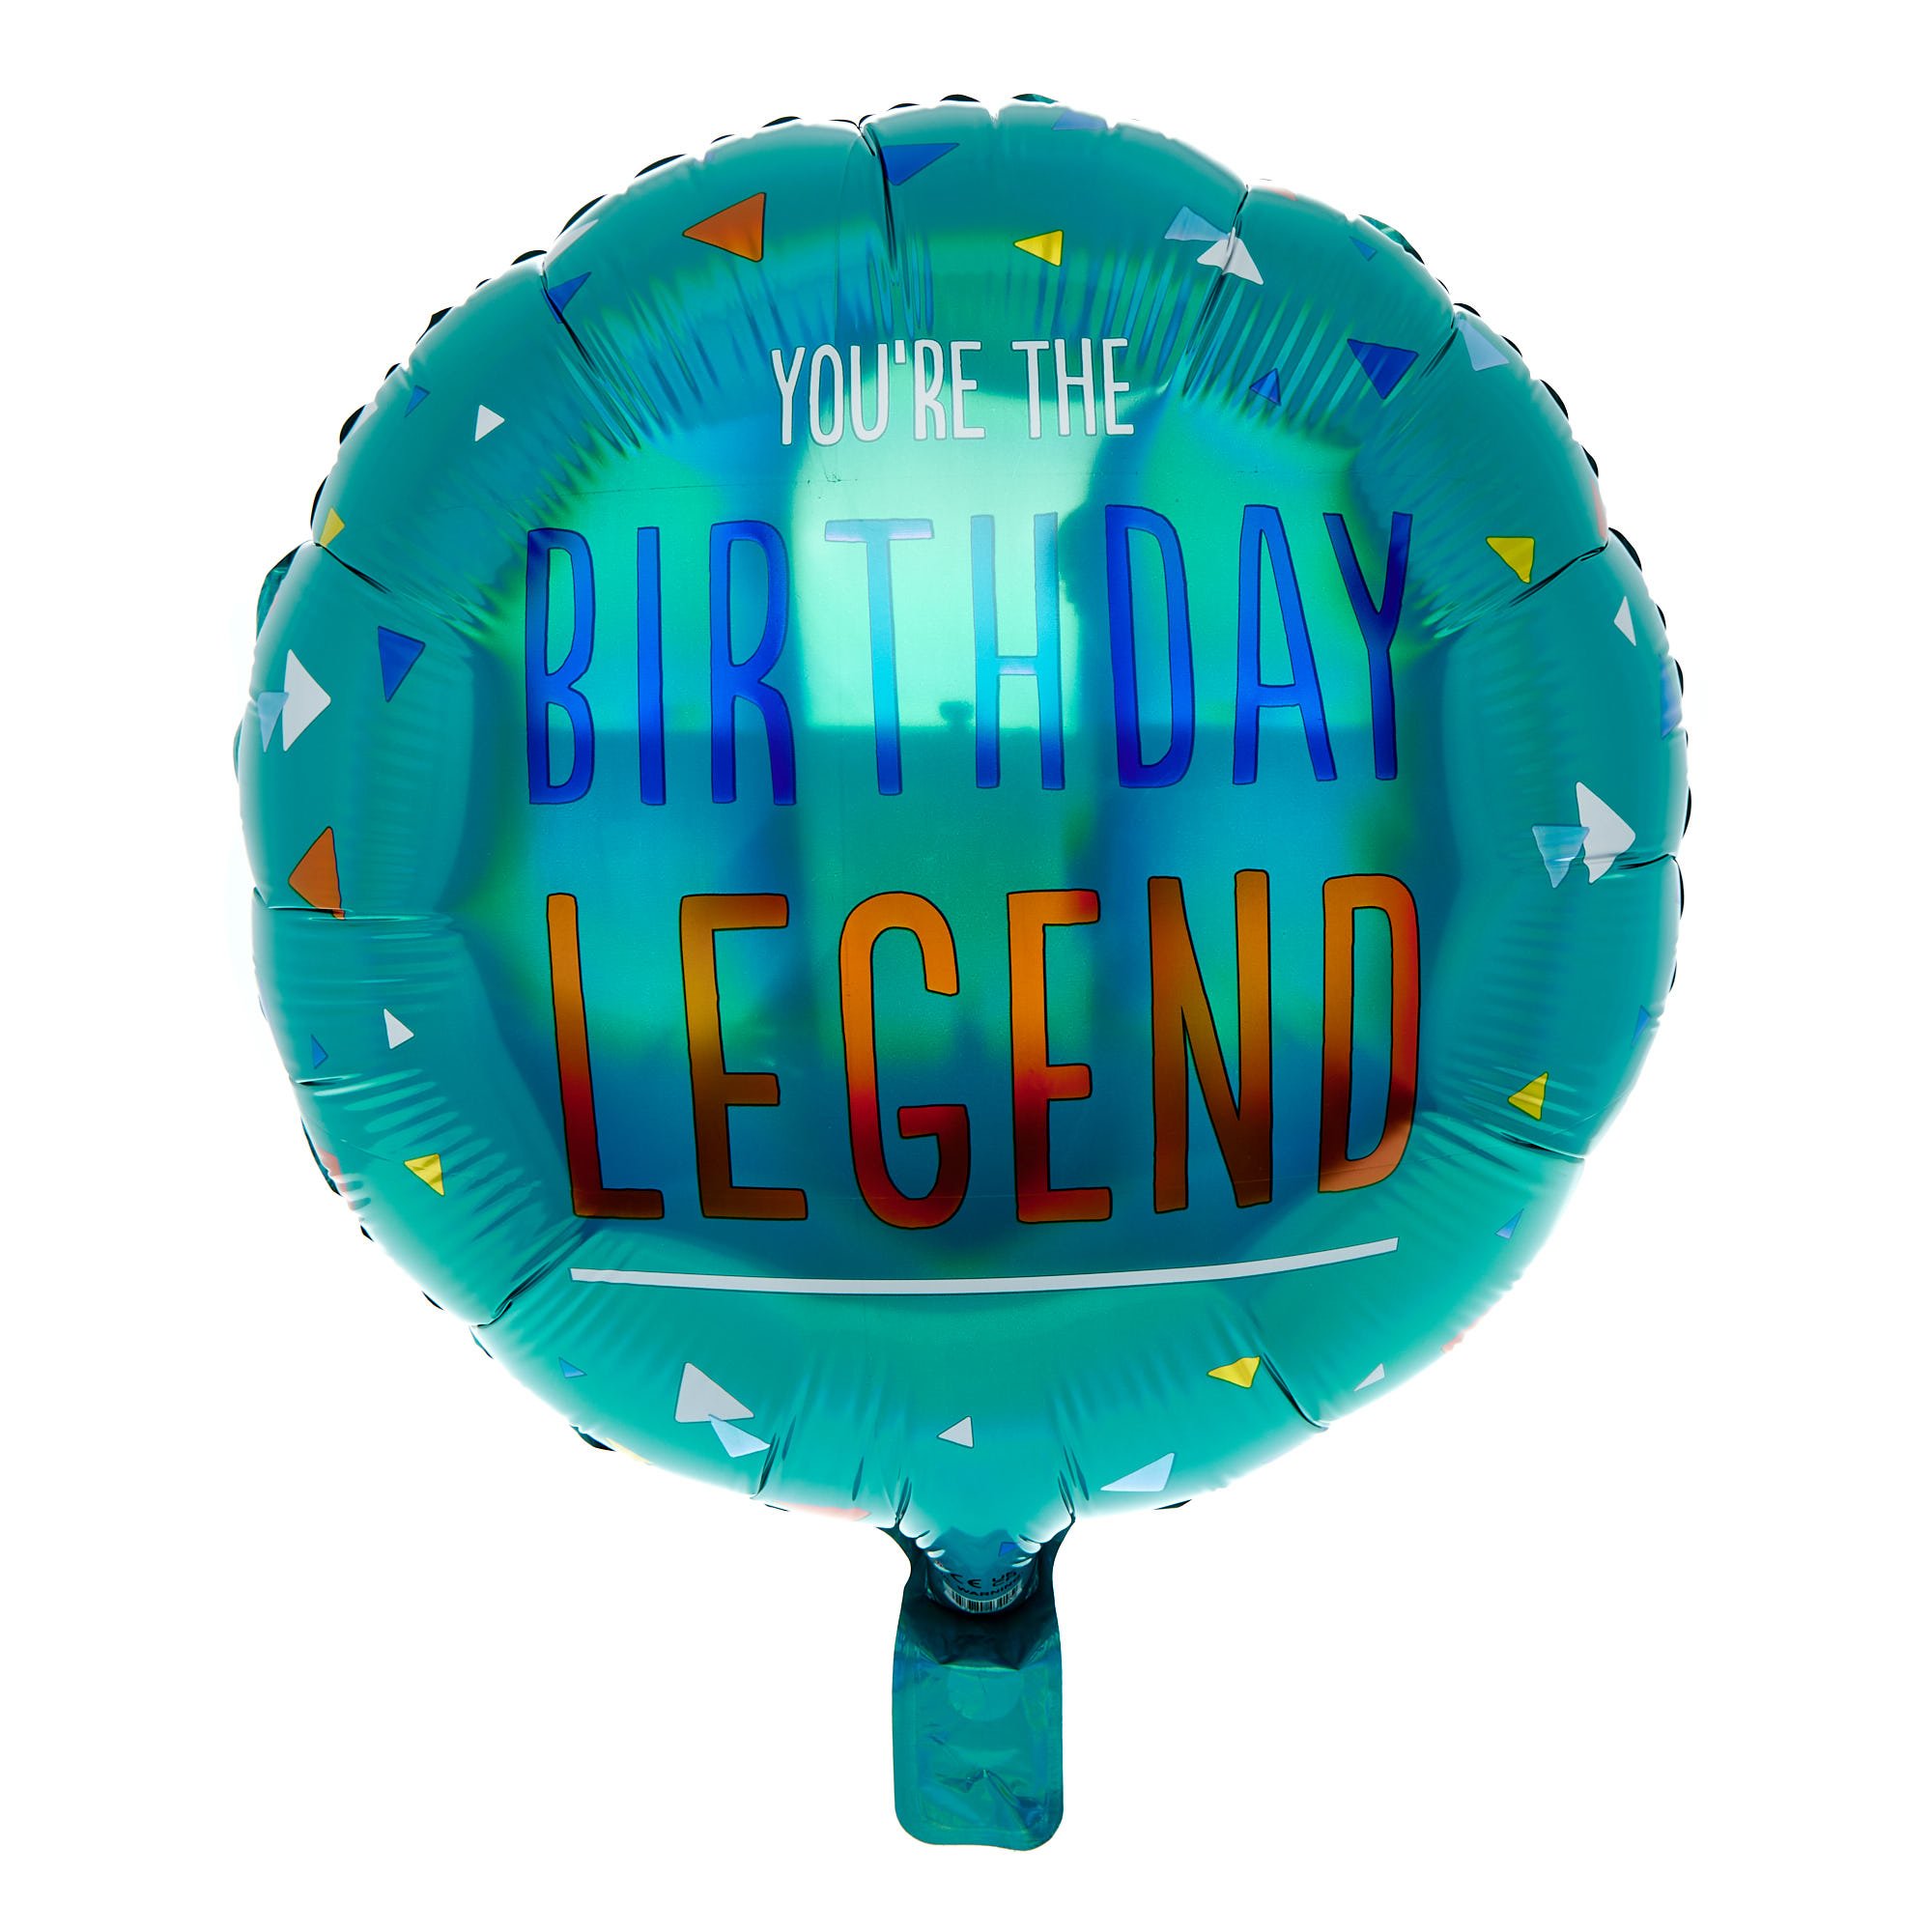 Birthday Legend Balloon & Lindt Chocolate Box - FREE GIFT CARD!